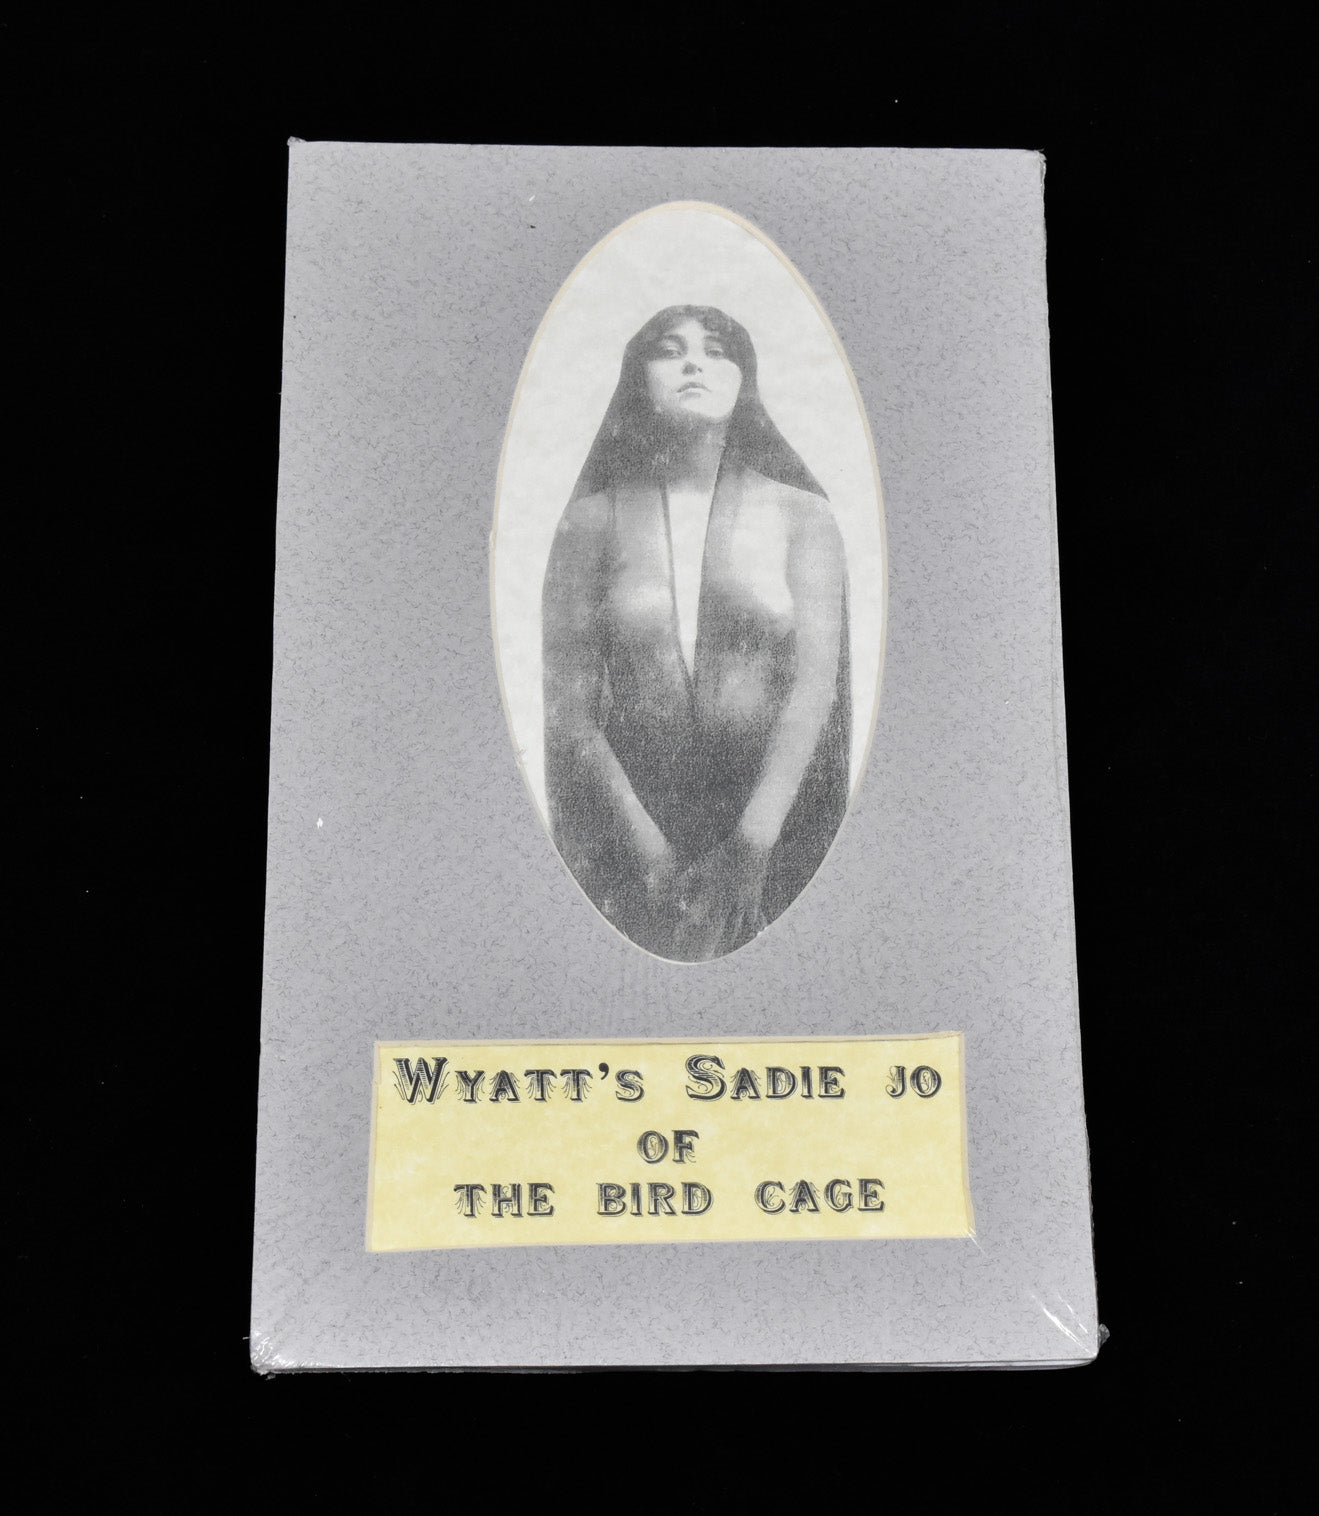 Wyatt's Sadie Jo of the Bird Cage Photo Reproduction Wyatt Earp's Wife Tombstone